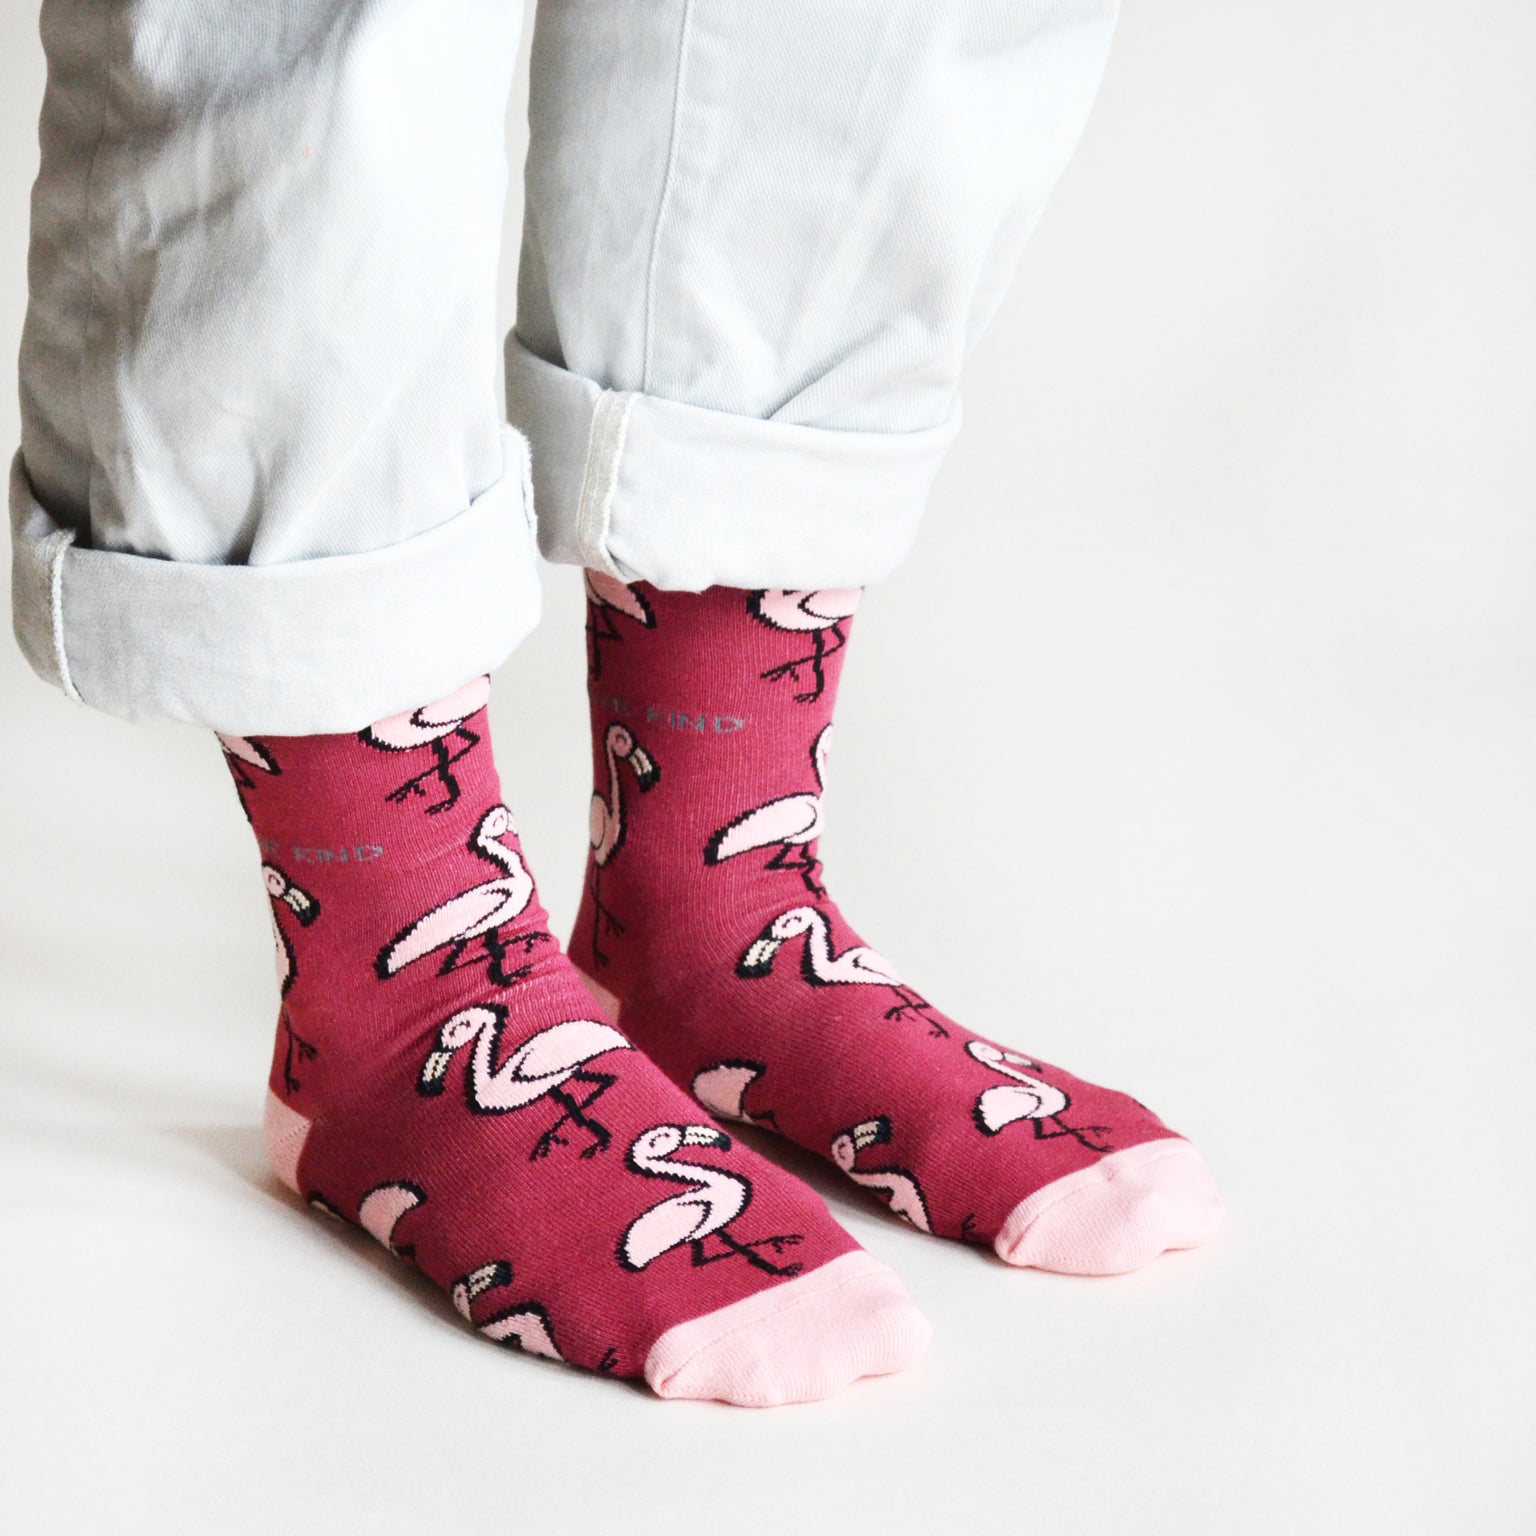 Save The Flamingos Bamboo Socks